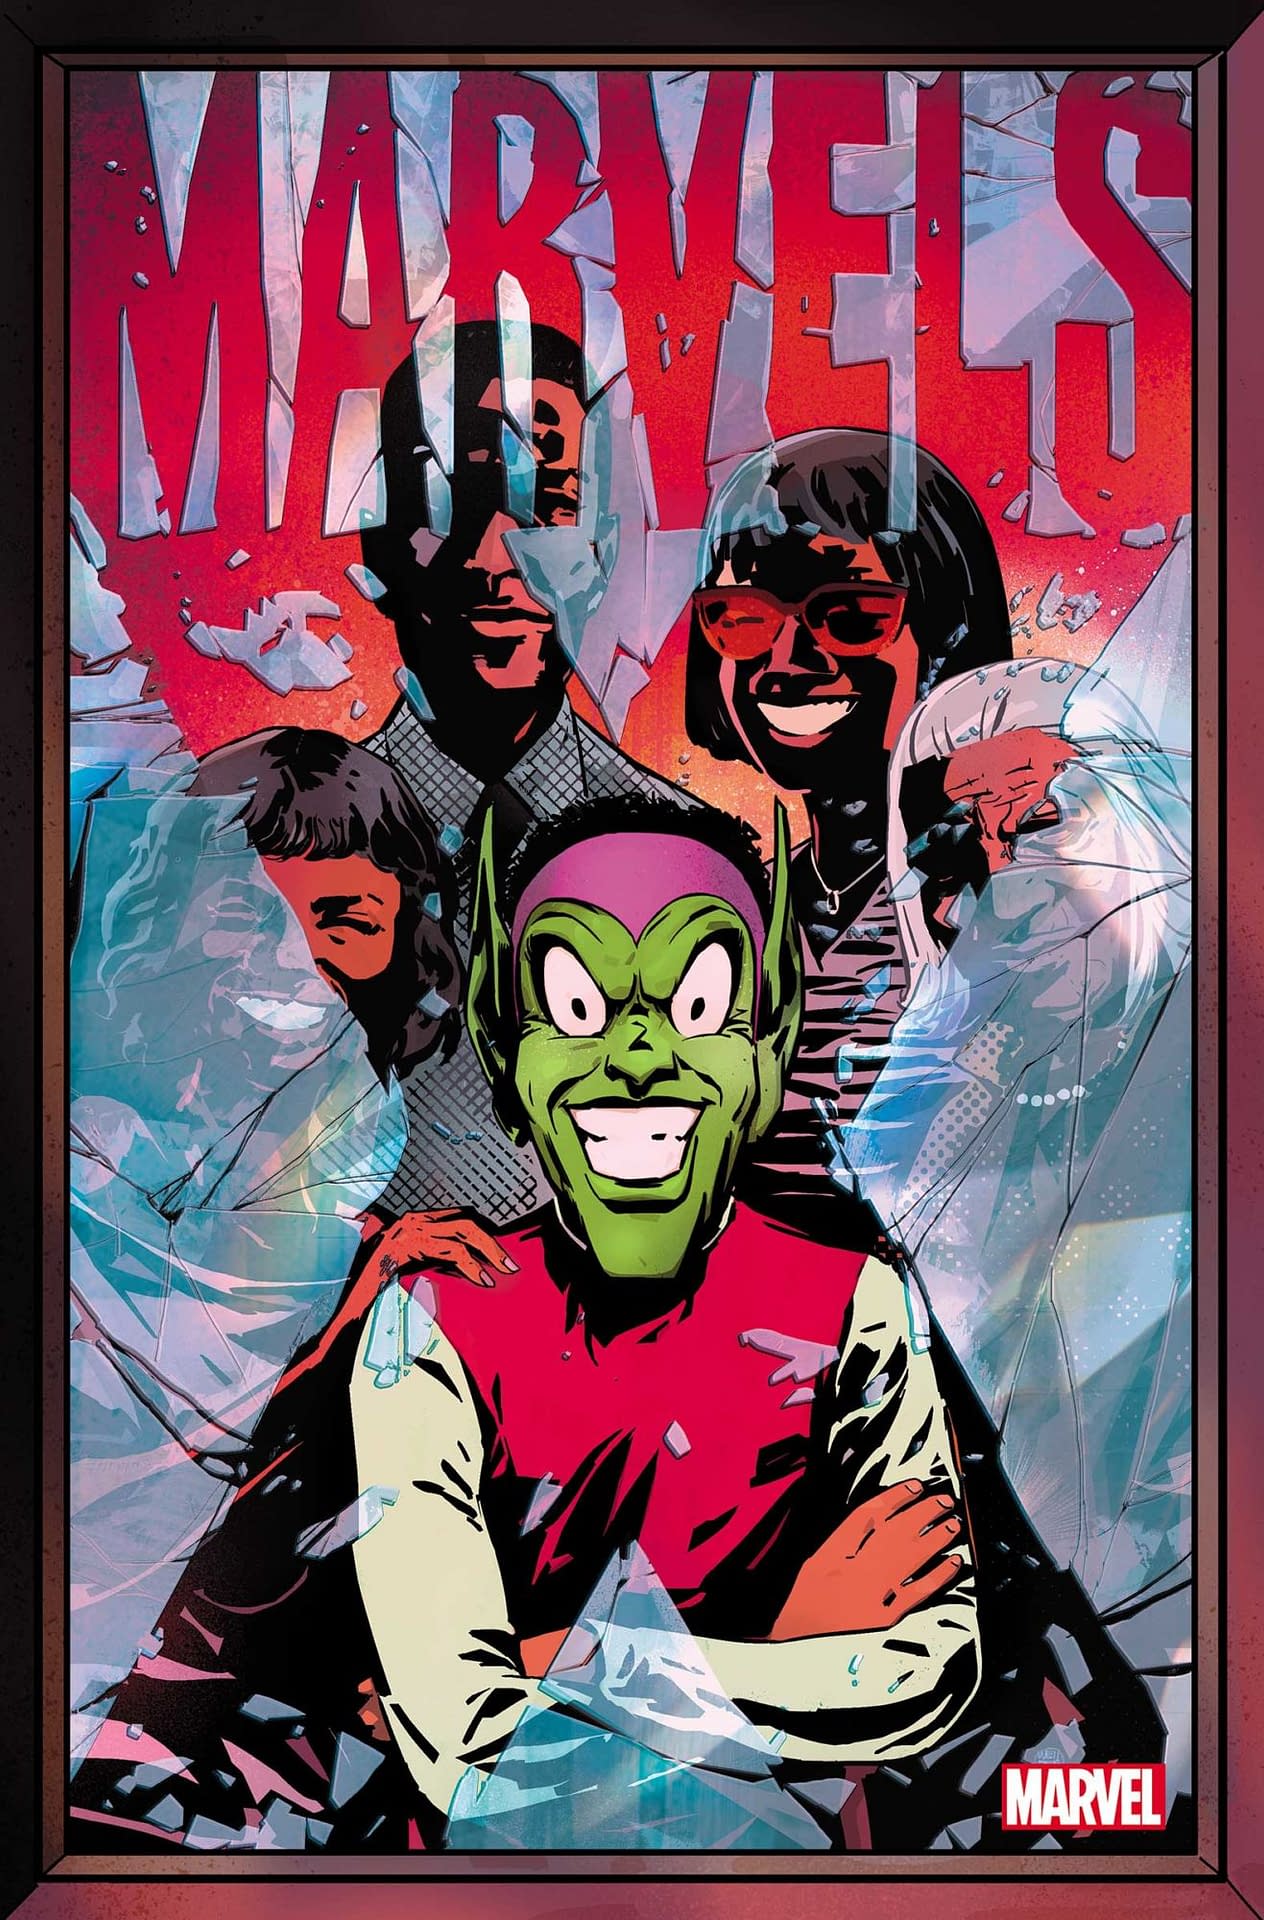 Mavel Comics Full January 2020 Solicitations